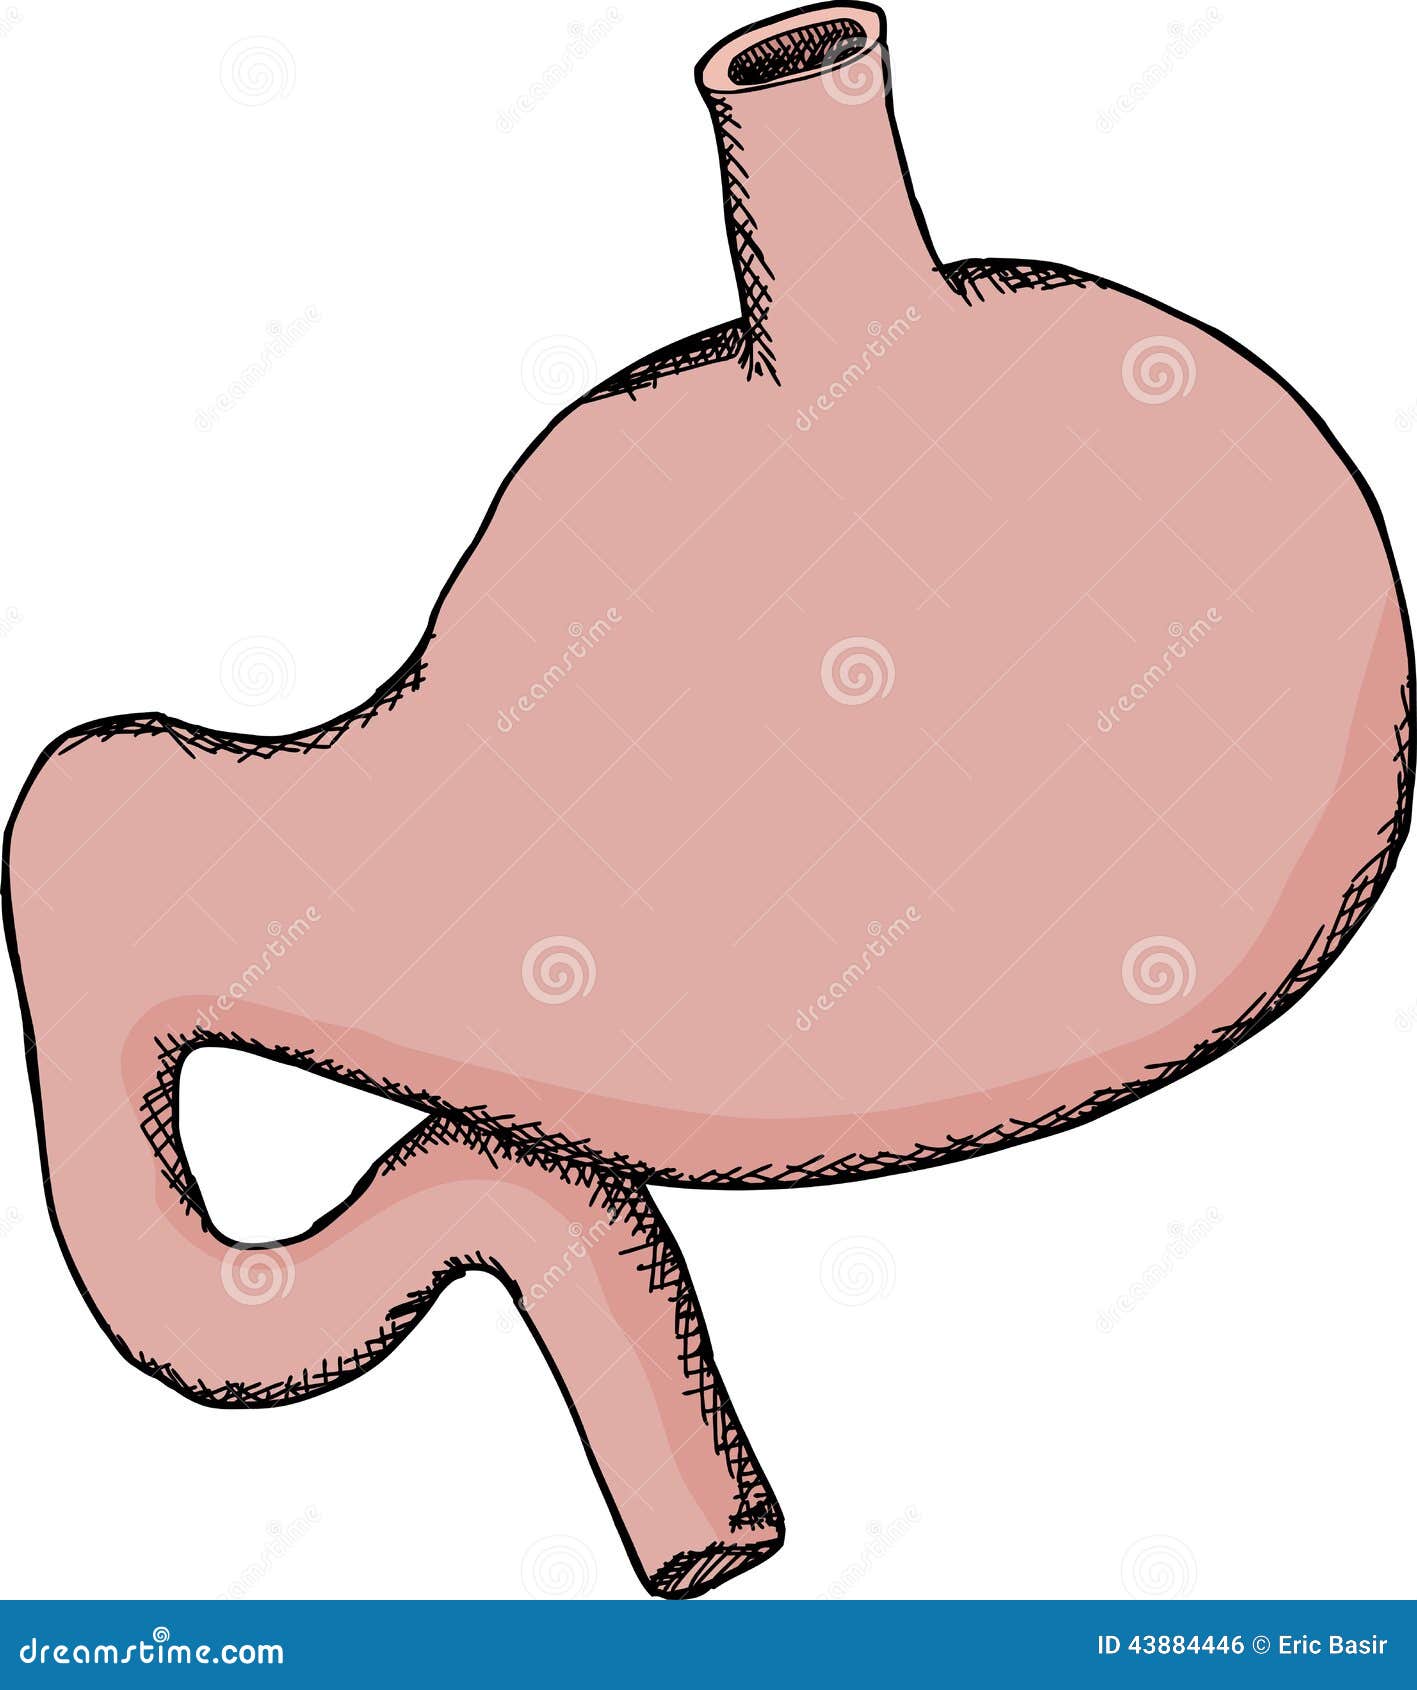 human stomach clipart - photo #34